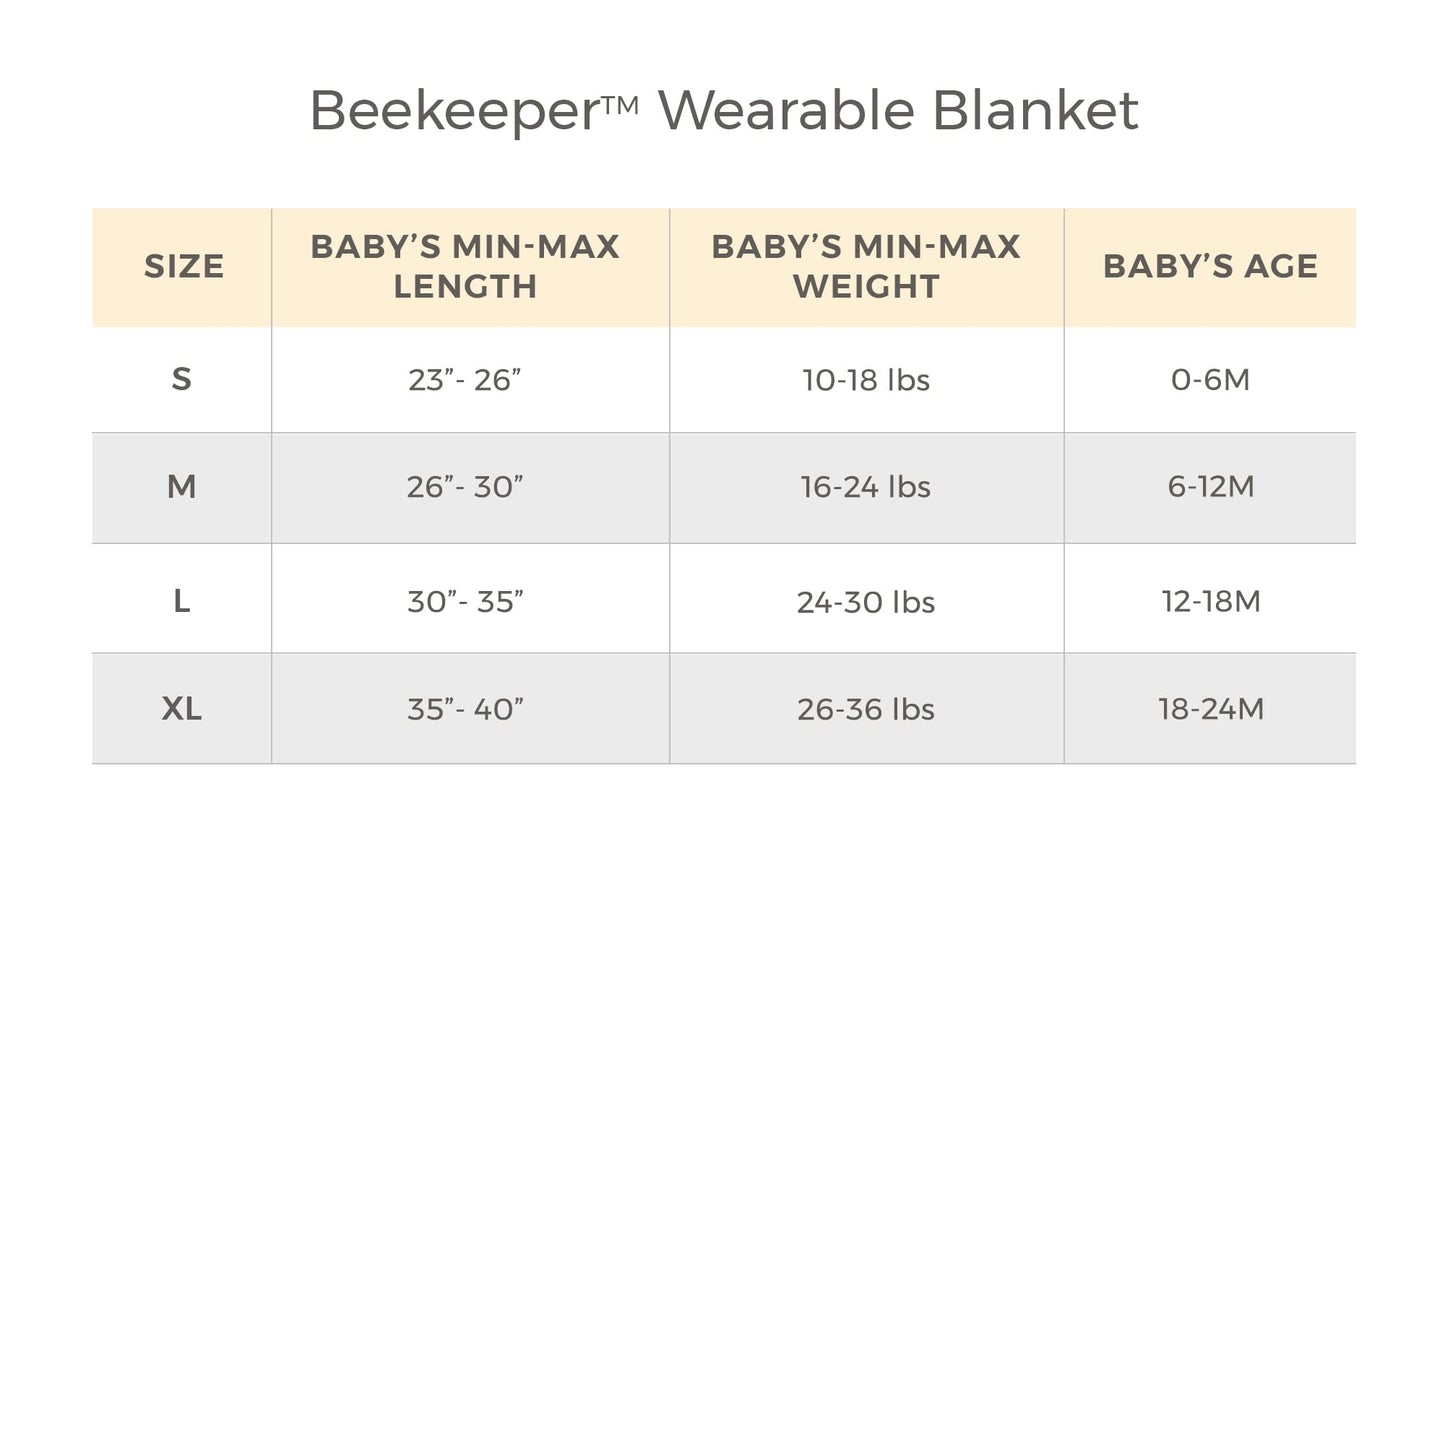 Burt's Bees Baby unisex baby Blanket, 100% Organic Cotton Beekeeper, Swaddle Transition Sleep Bag Wearable Blanket, Friendly Bears, Large US